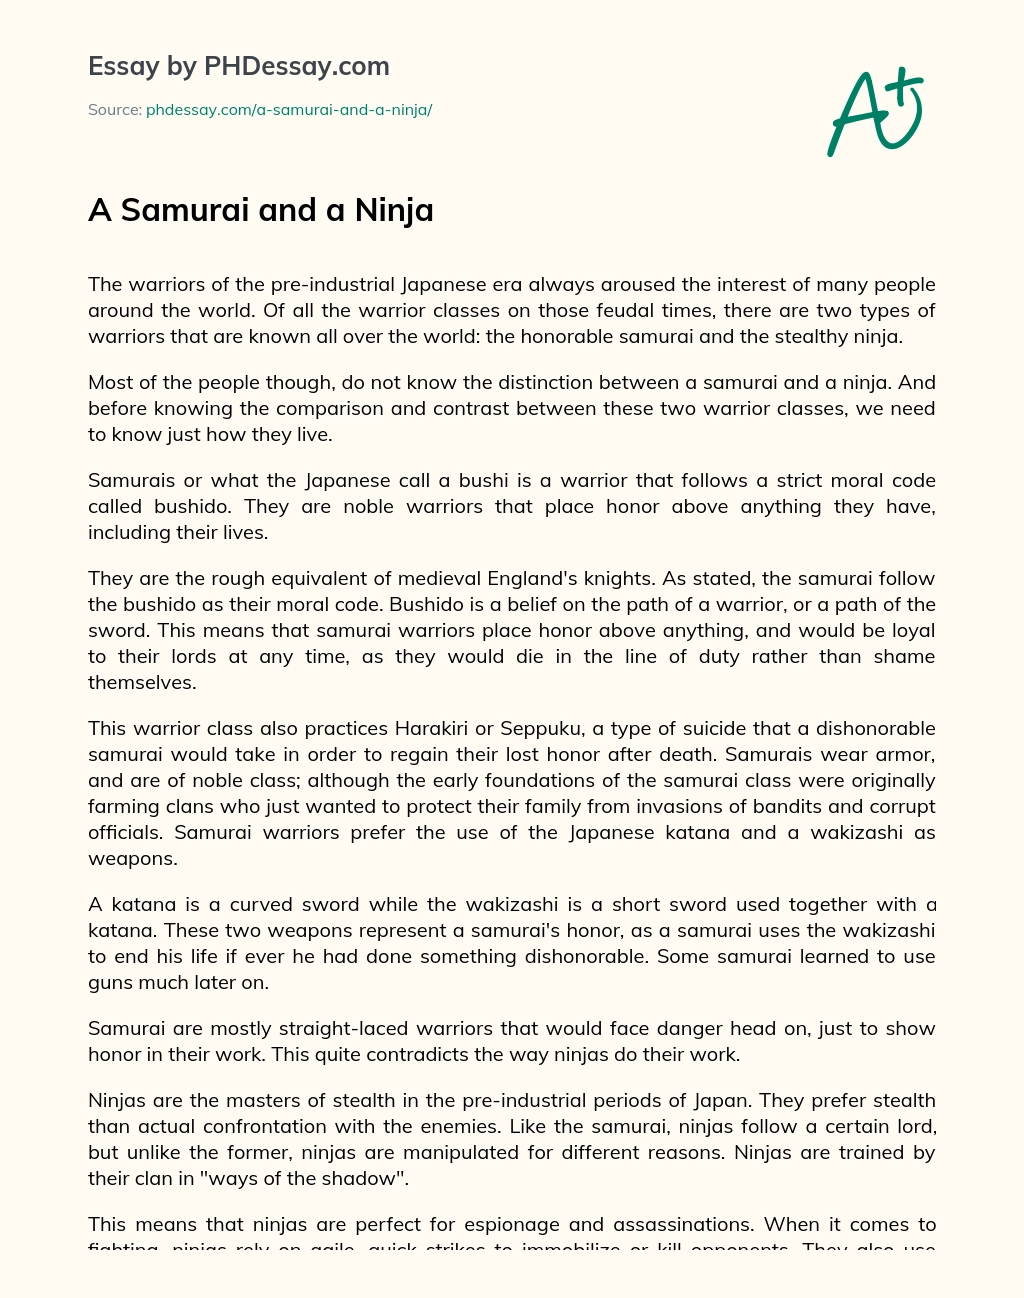 A Samurai and a Ninja essay